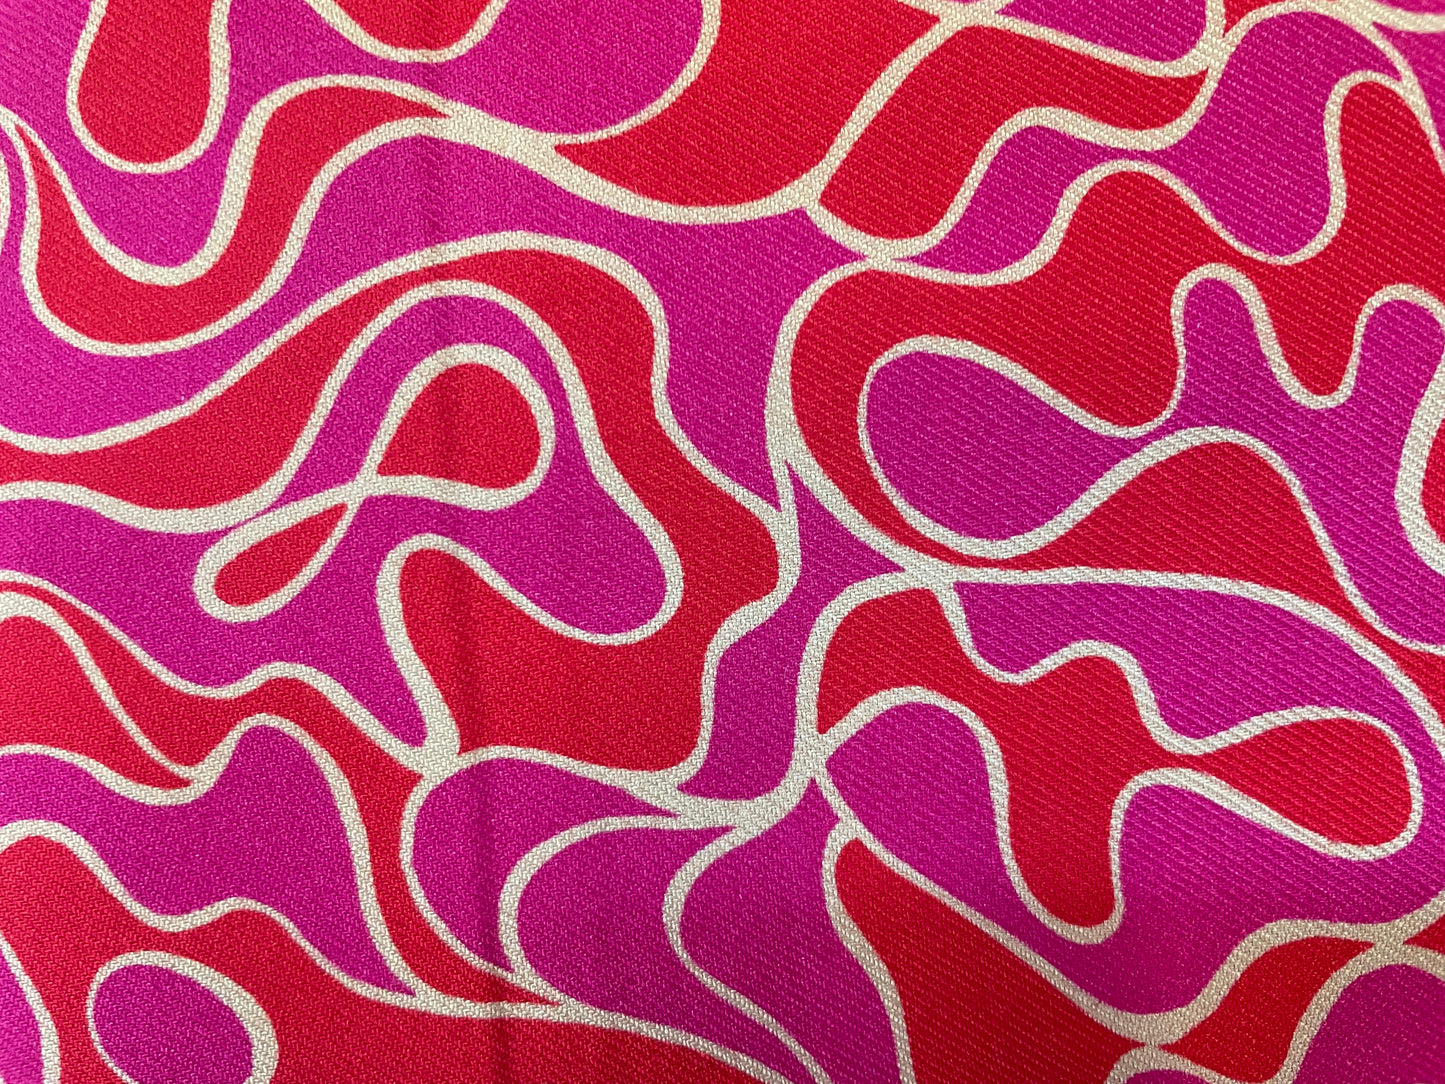 Italian Rayon Twill Groovy Print - Pink & Red